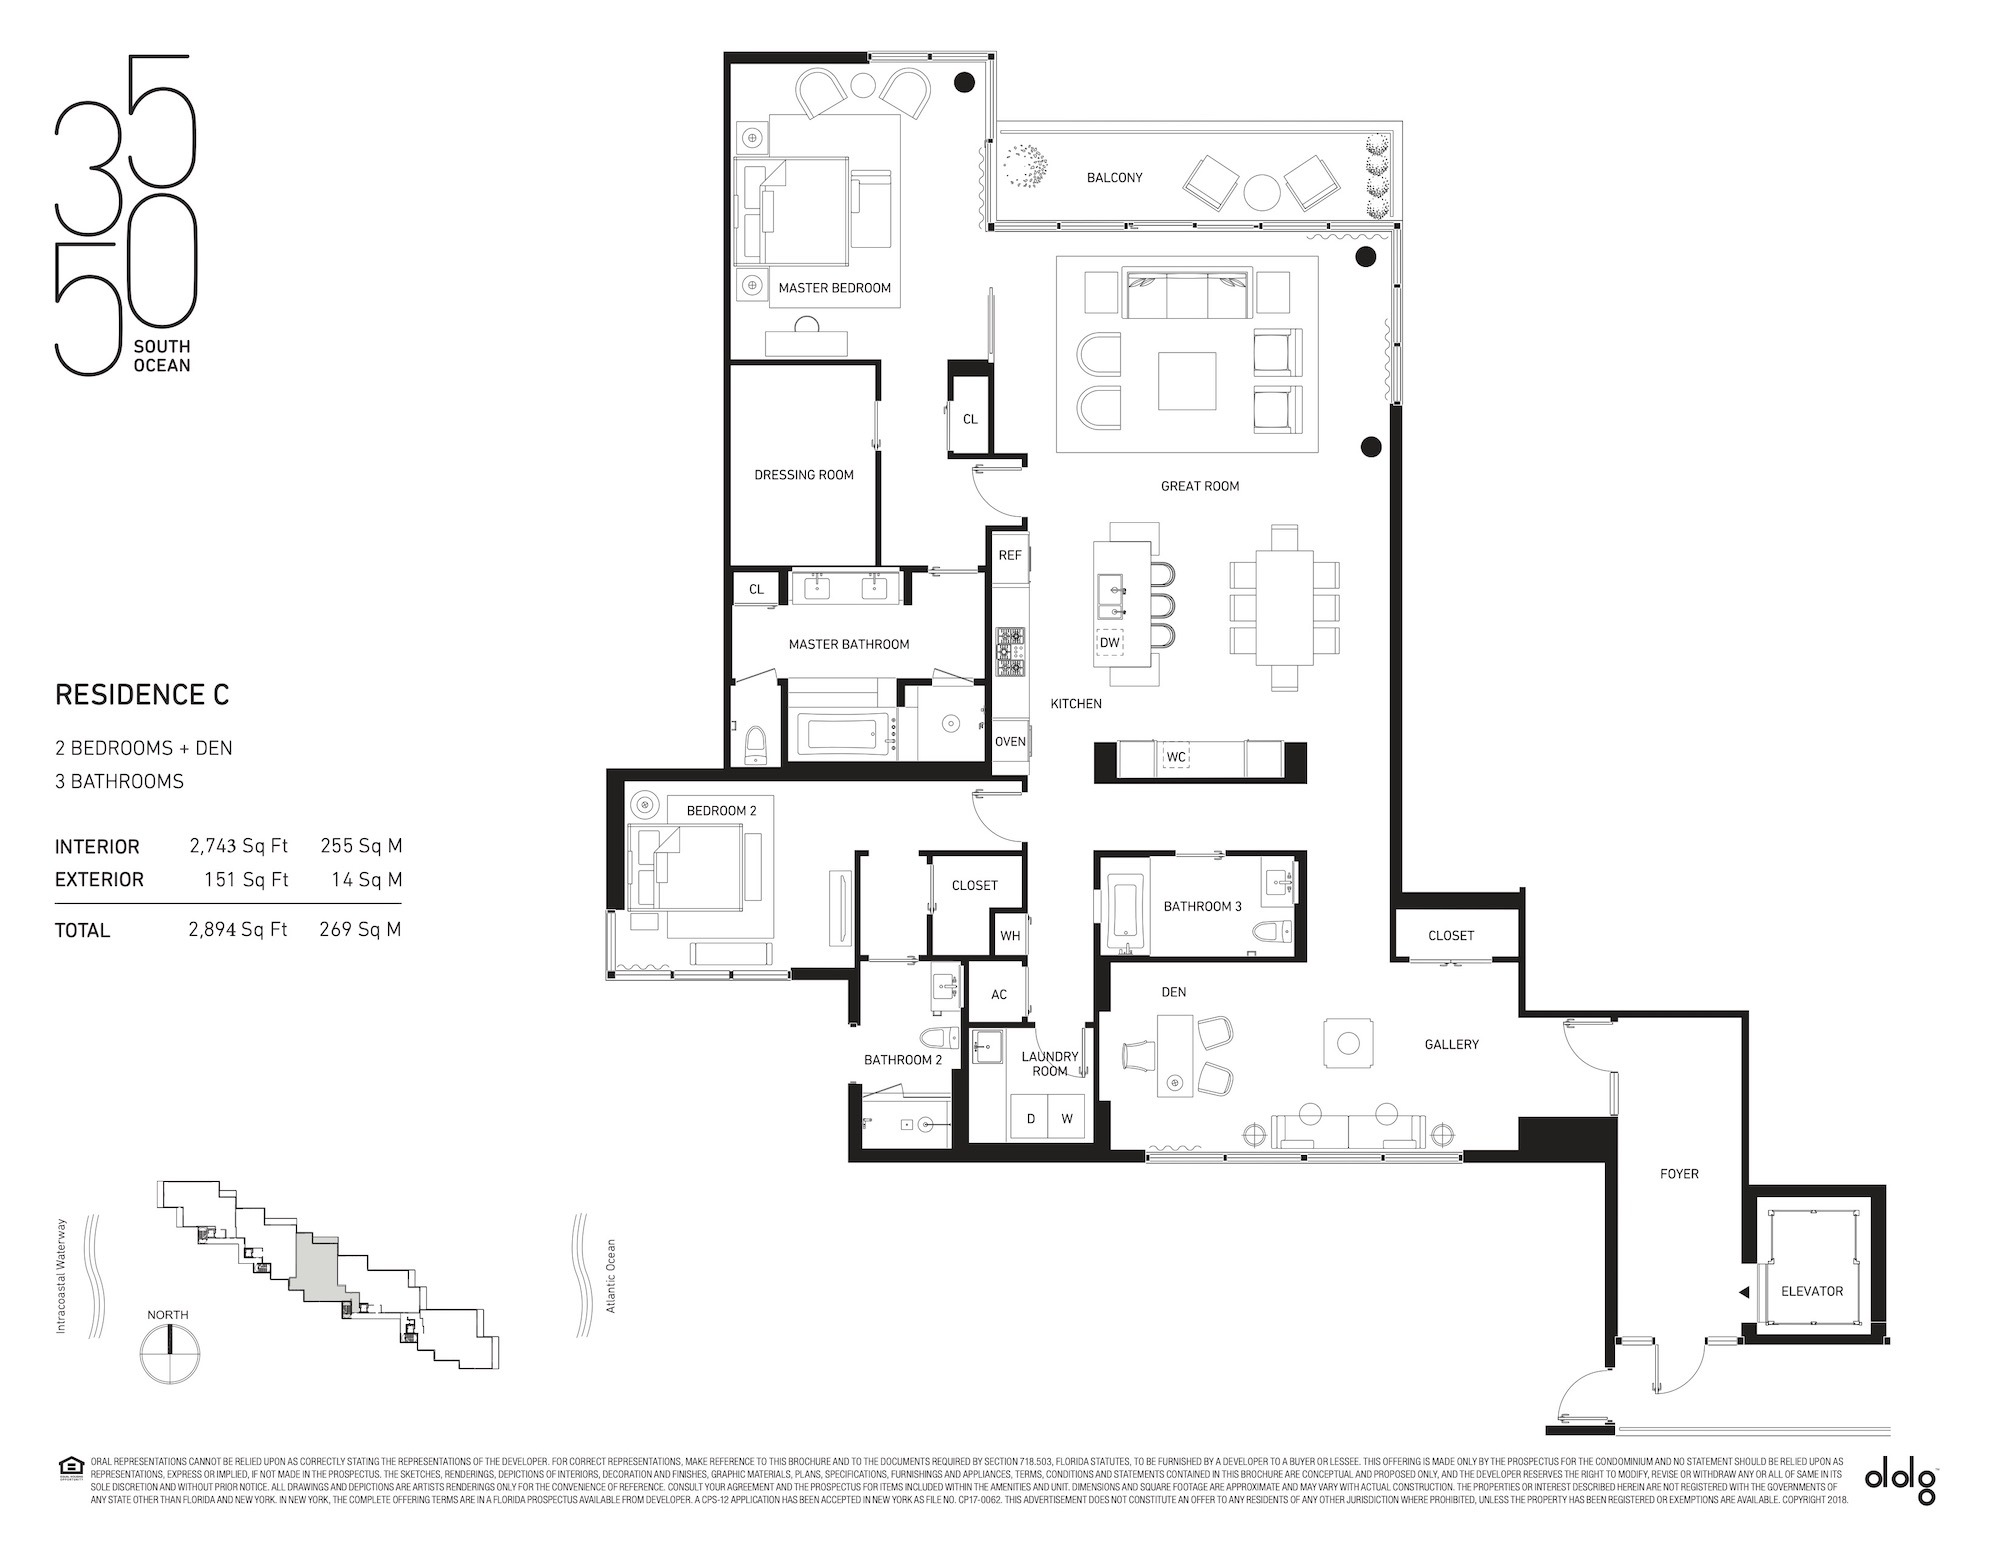 Floor Plan for 3550 South Ocean Floorplans, Residence C